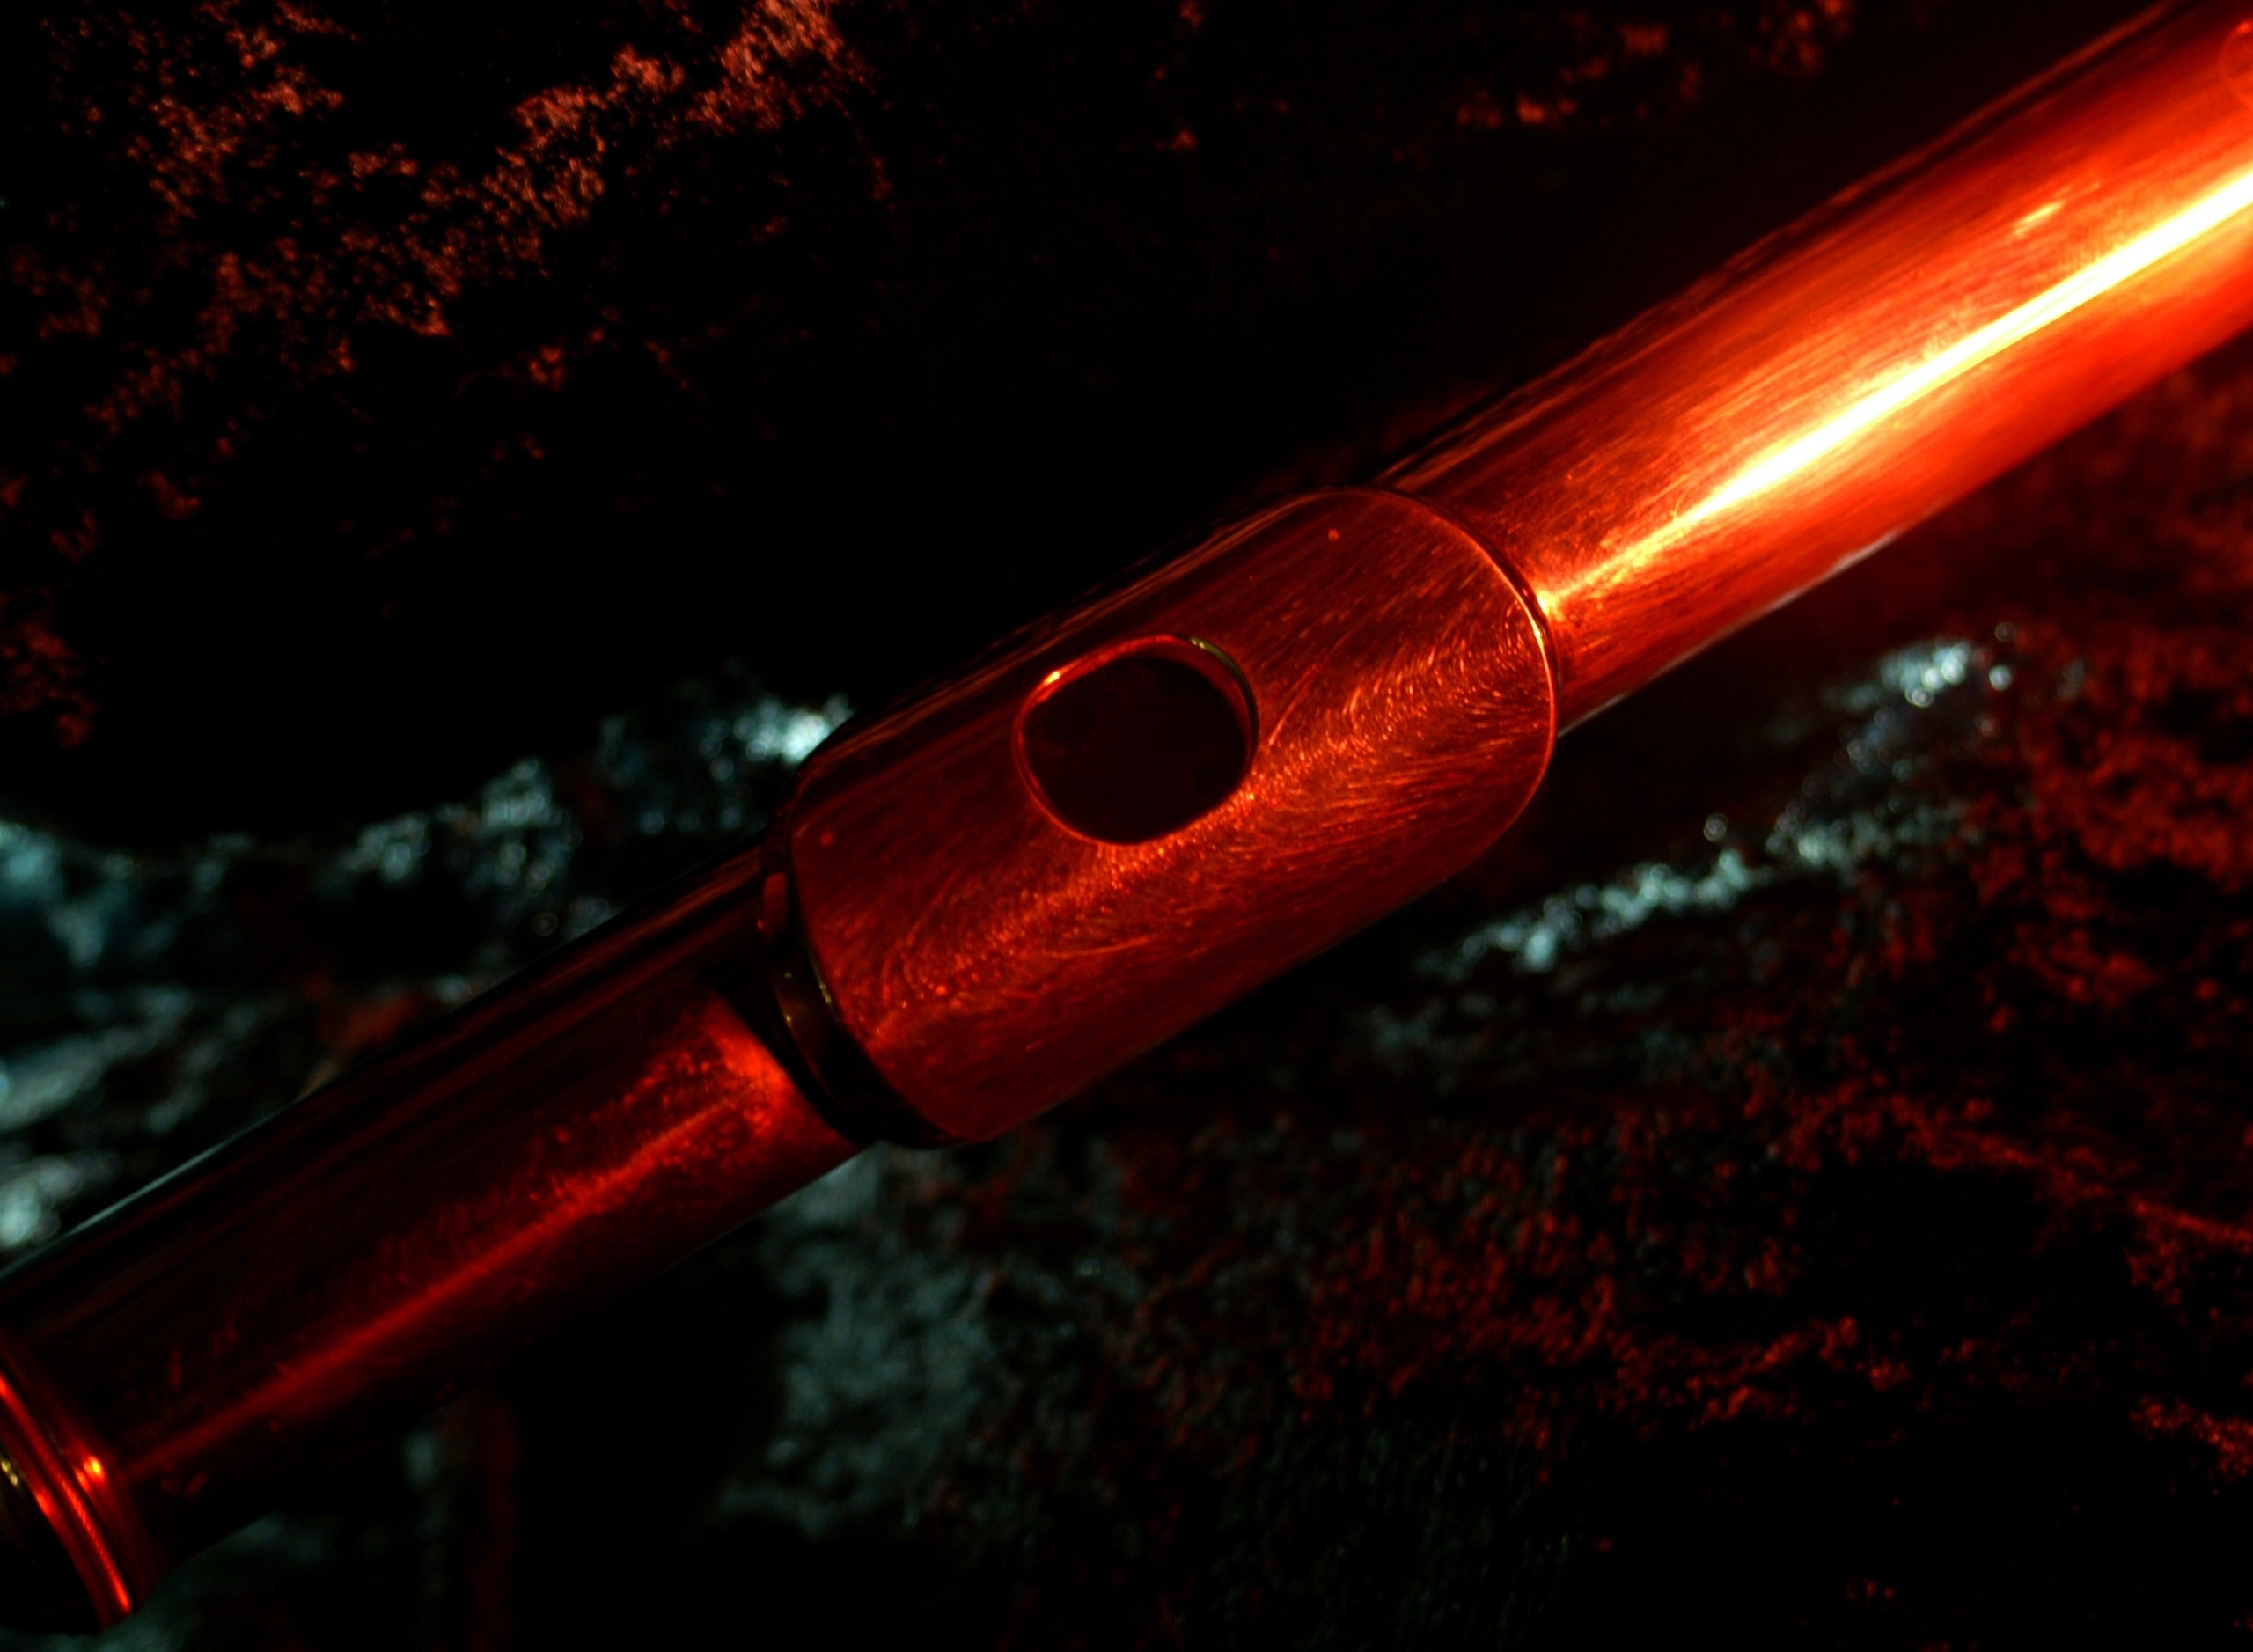 red metal rod